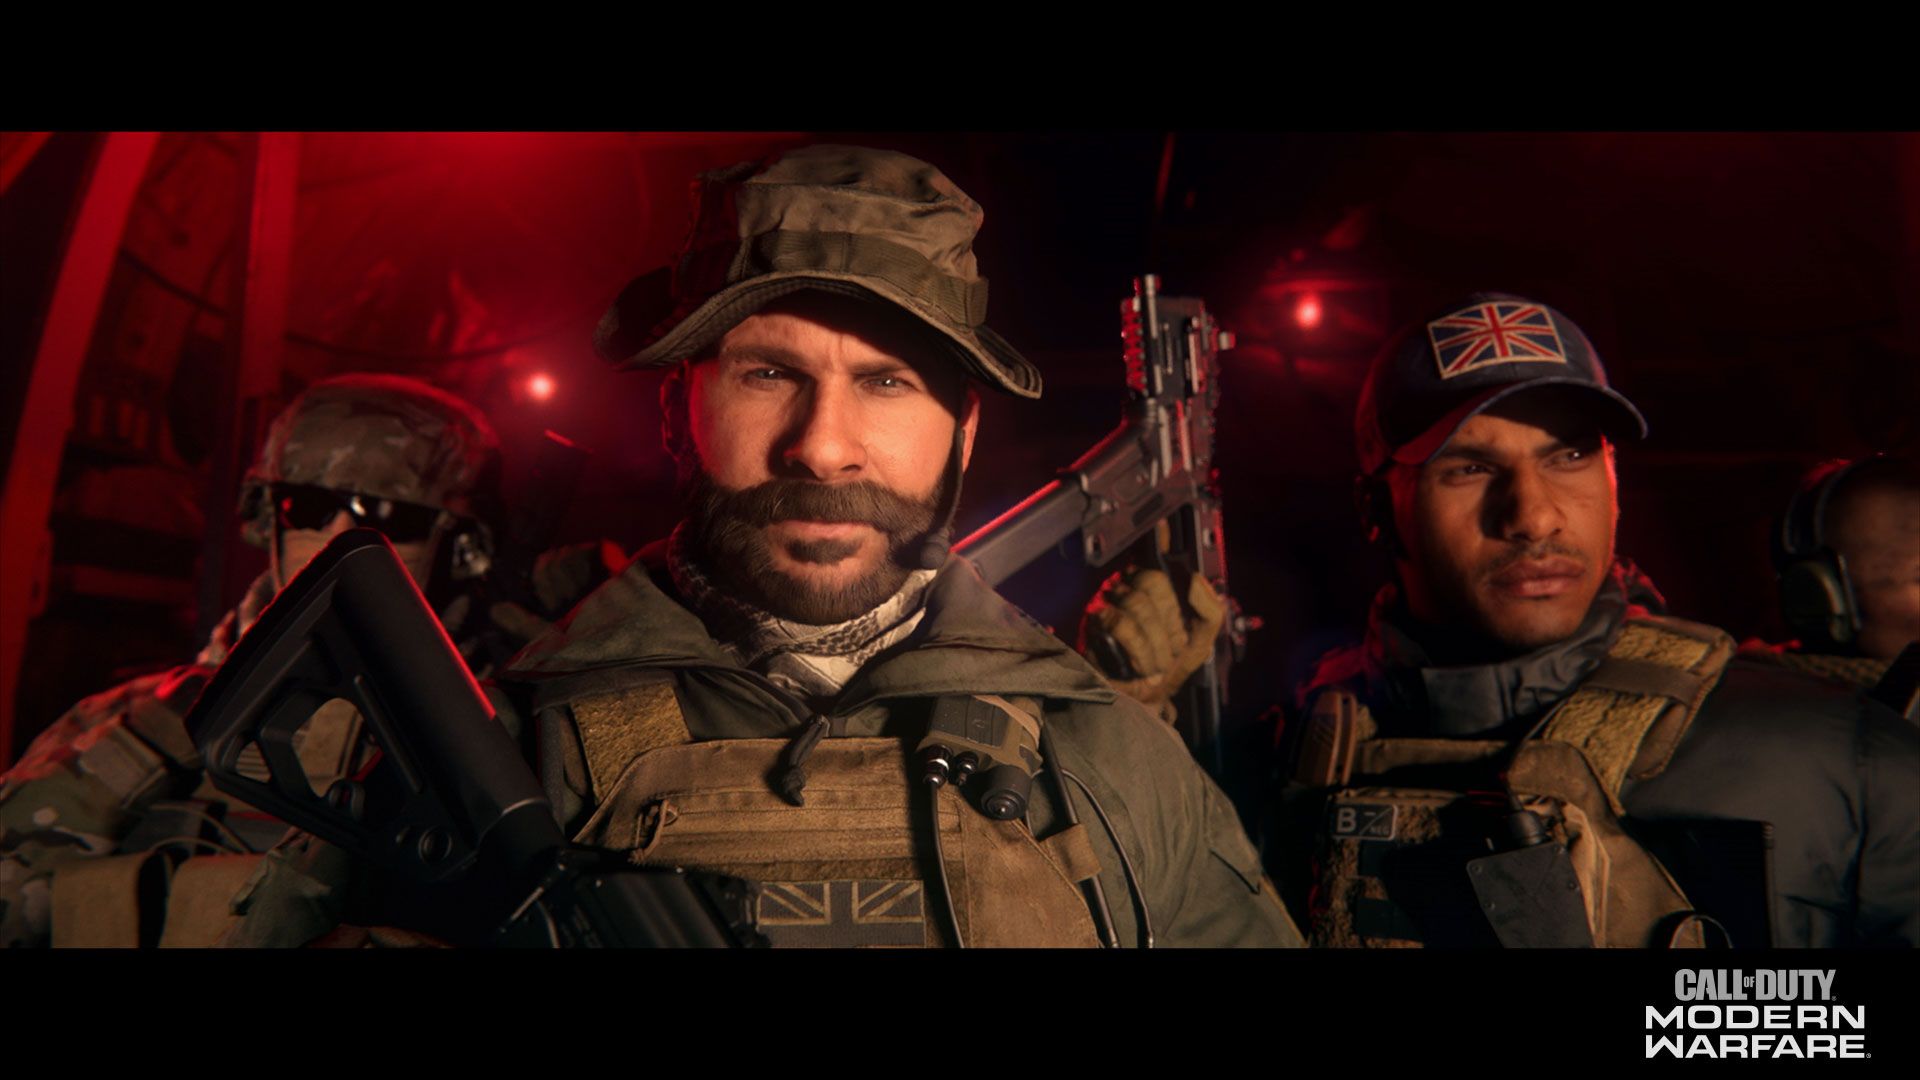 Call of Duty Warzone Season 4 starts on June 3